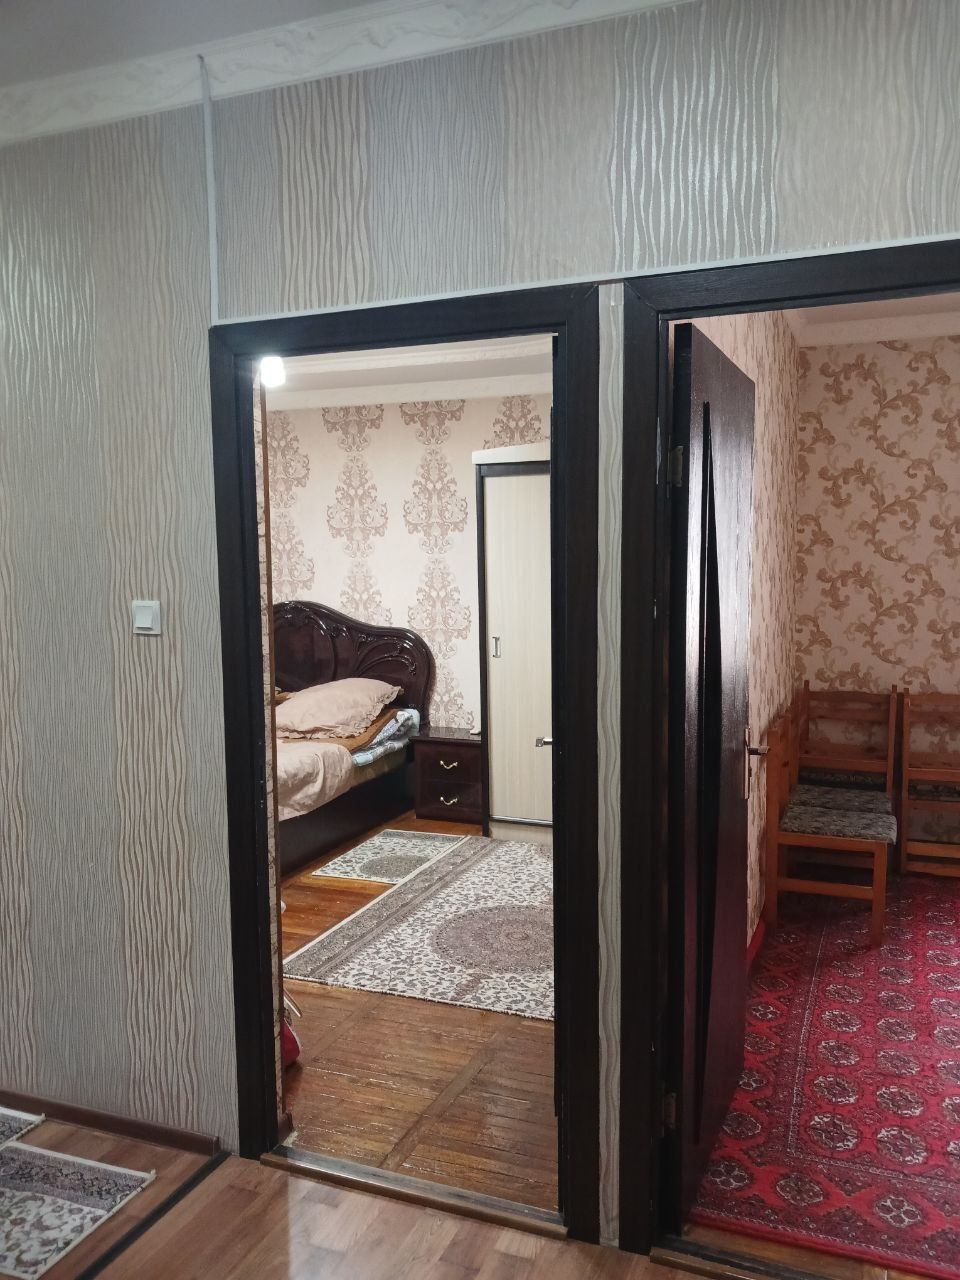 Аренда 2 ком квартира Дархан-3 чистая квартира с обстановкой 400$